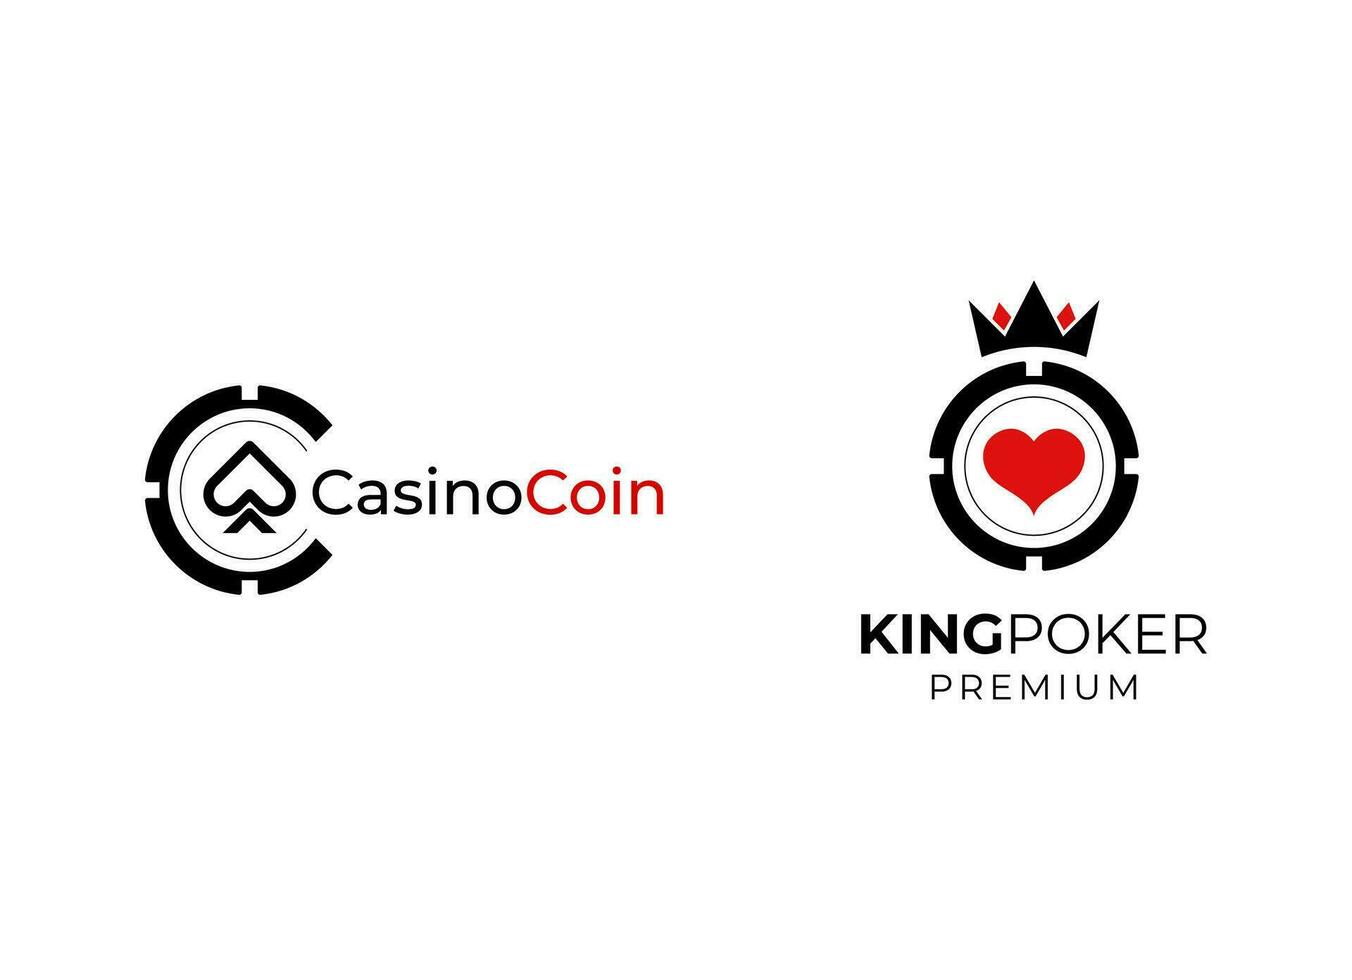 Poker club logo design. Vector of poker coint logo element